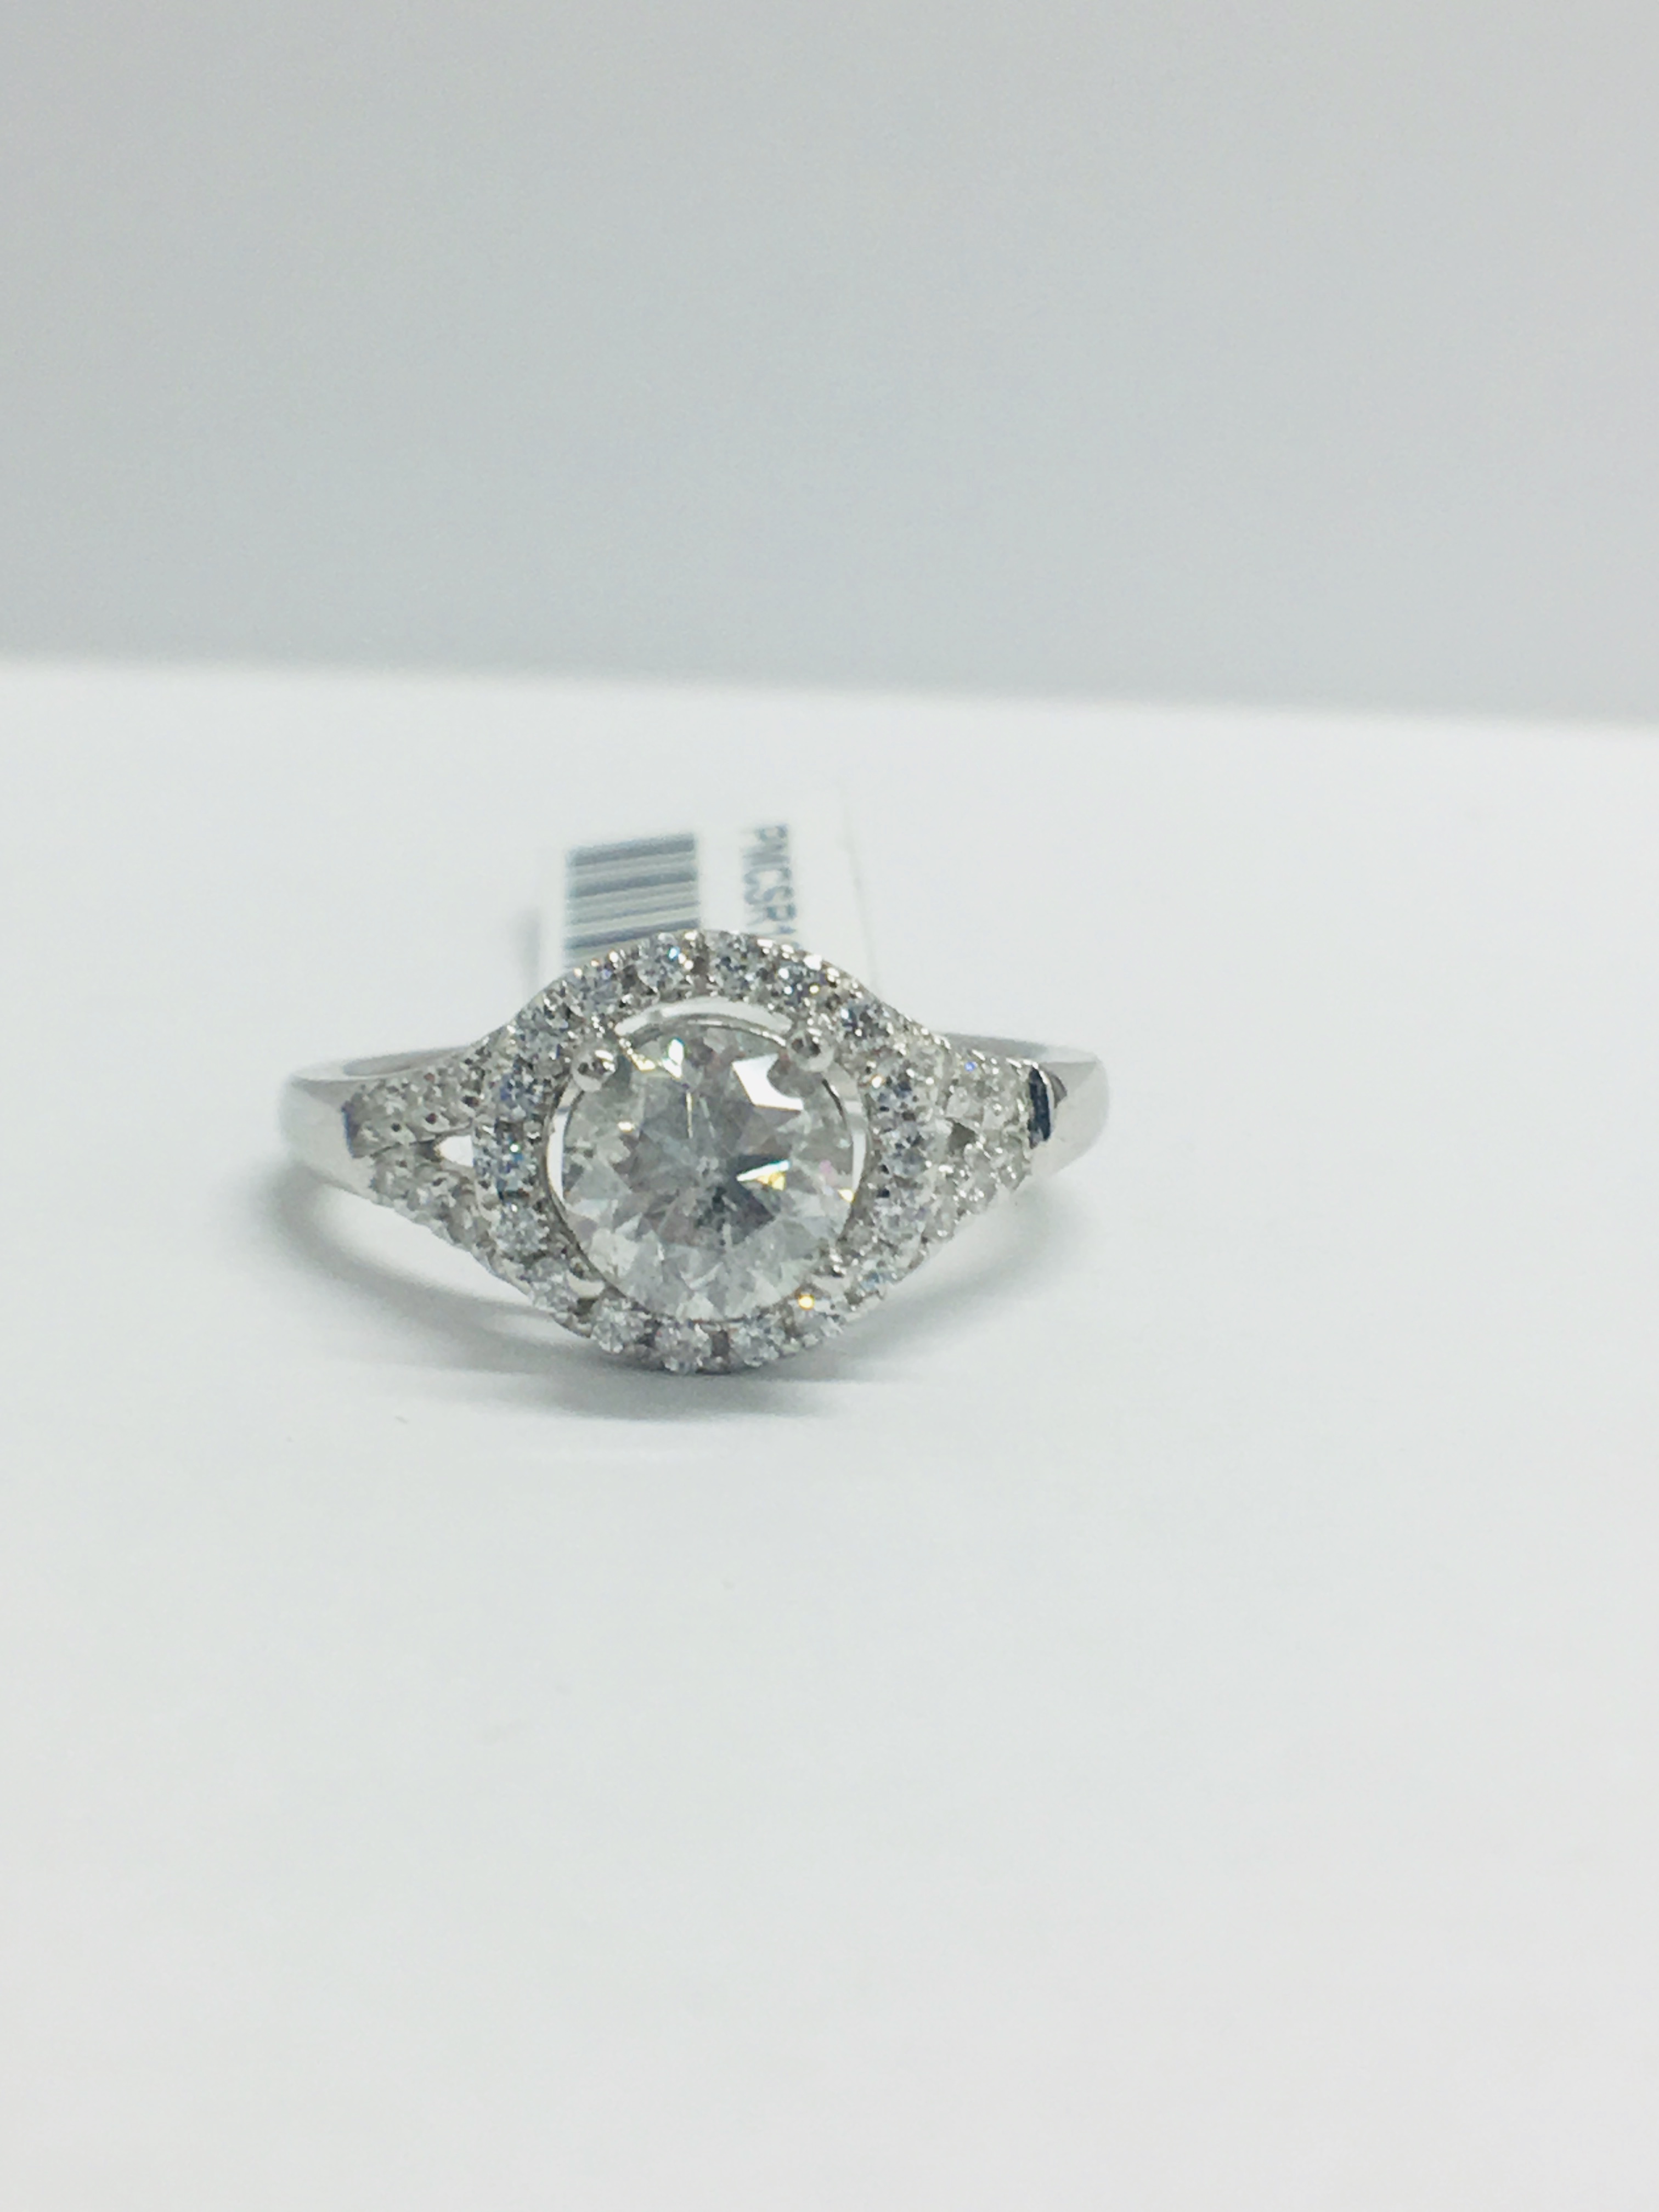 Platinum Solitaire 4 Claw Diamond Ring, - Image 6 of 6